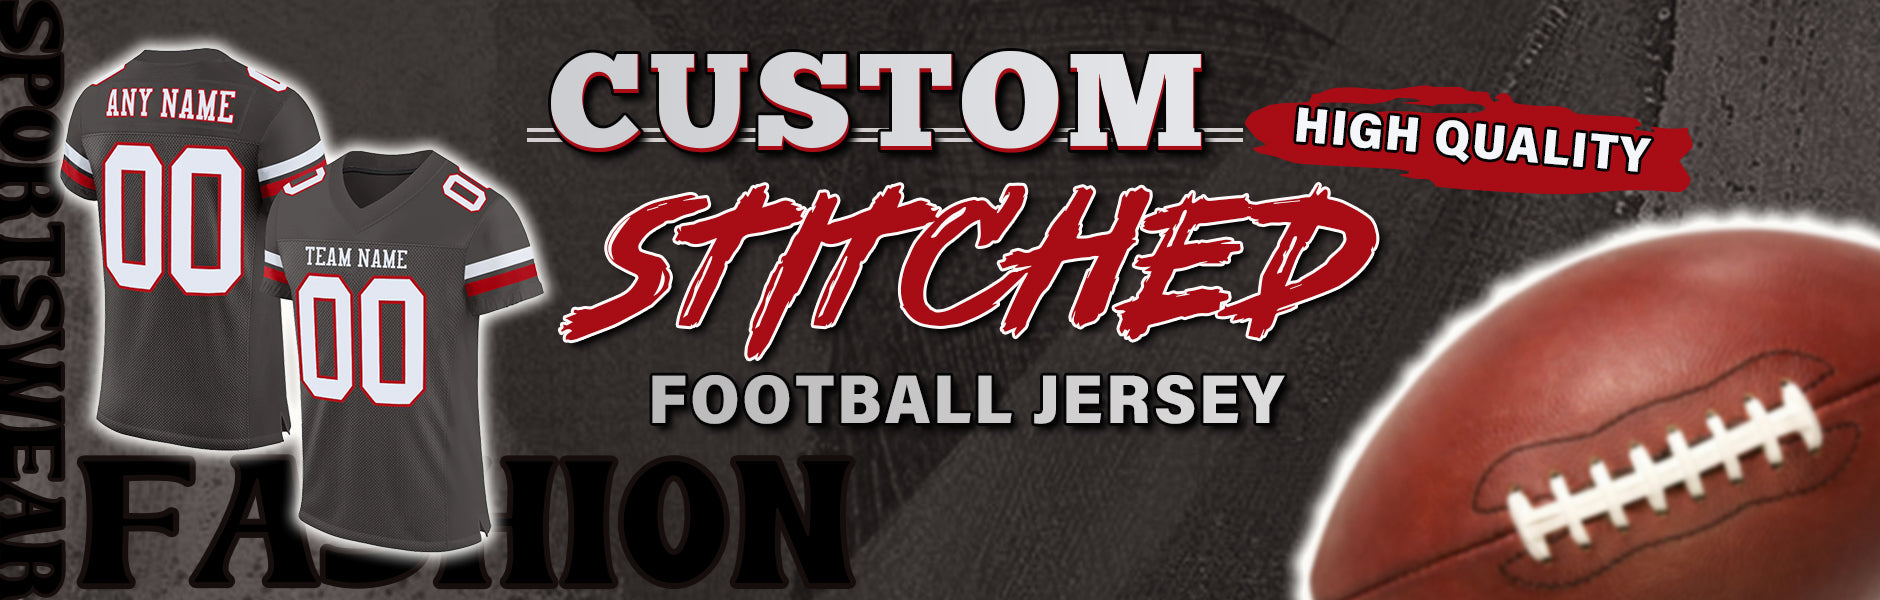 custom football pewter jersey